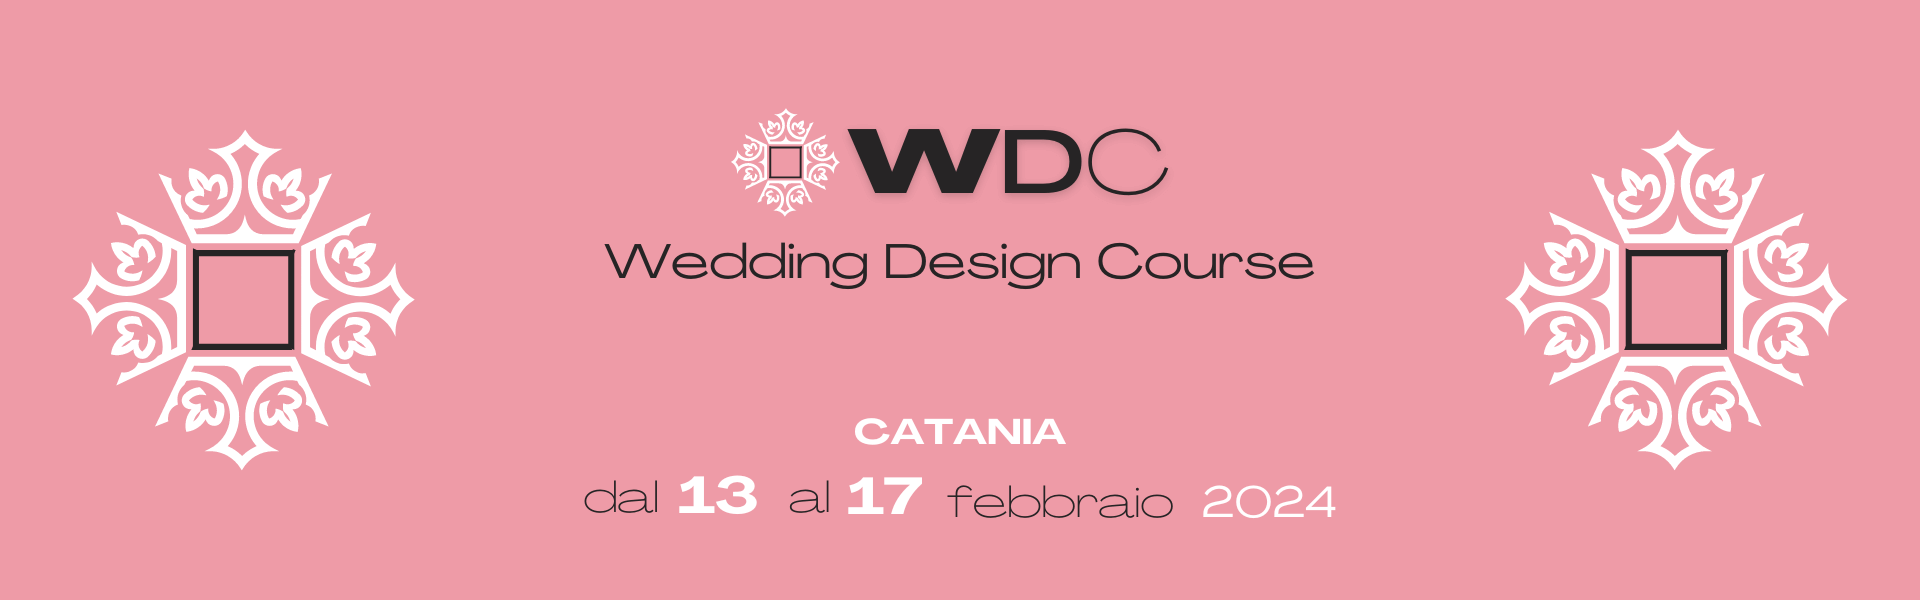 Wedding Design Course - dal 13 al 17 febbraio 2024 a Catania